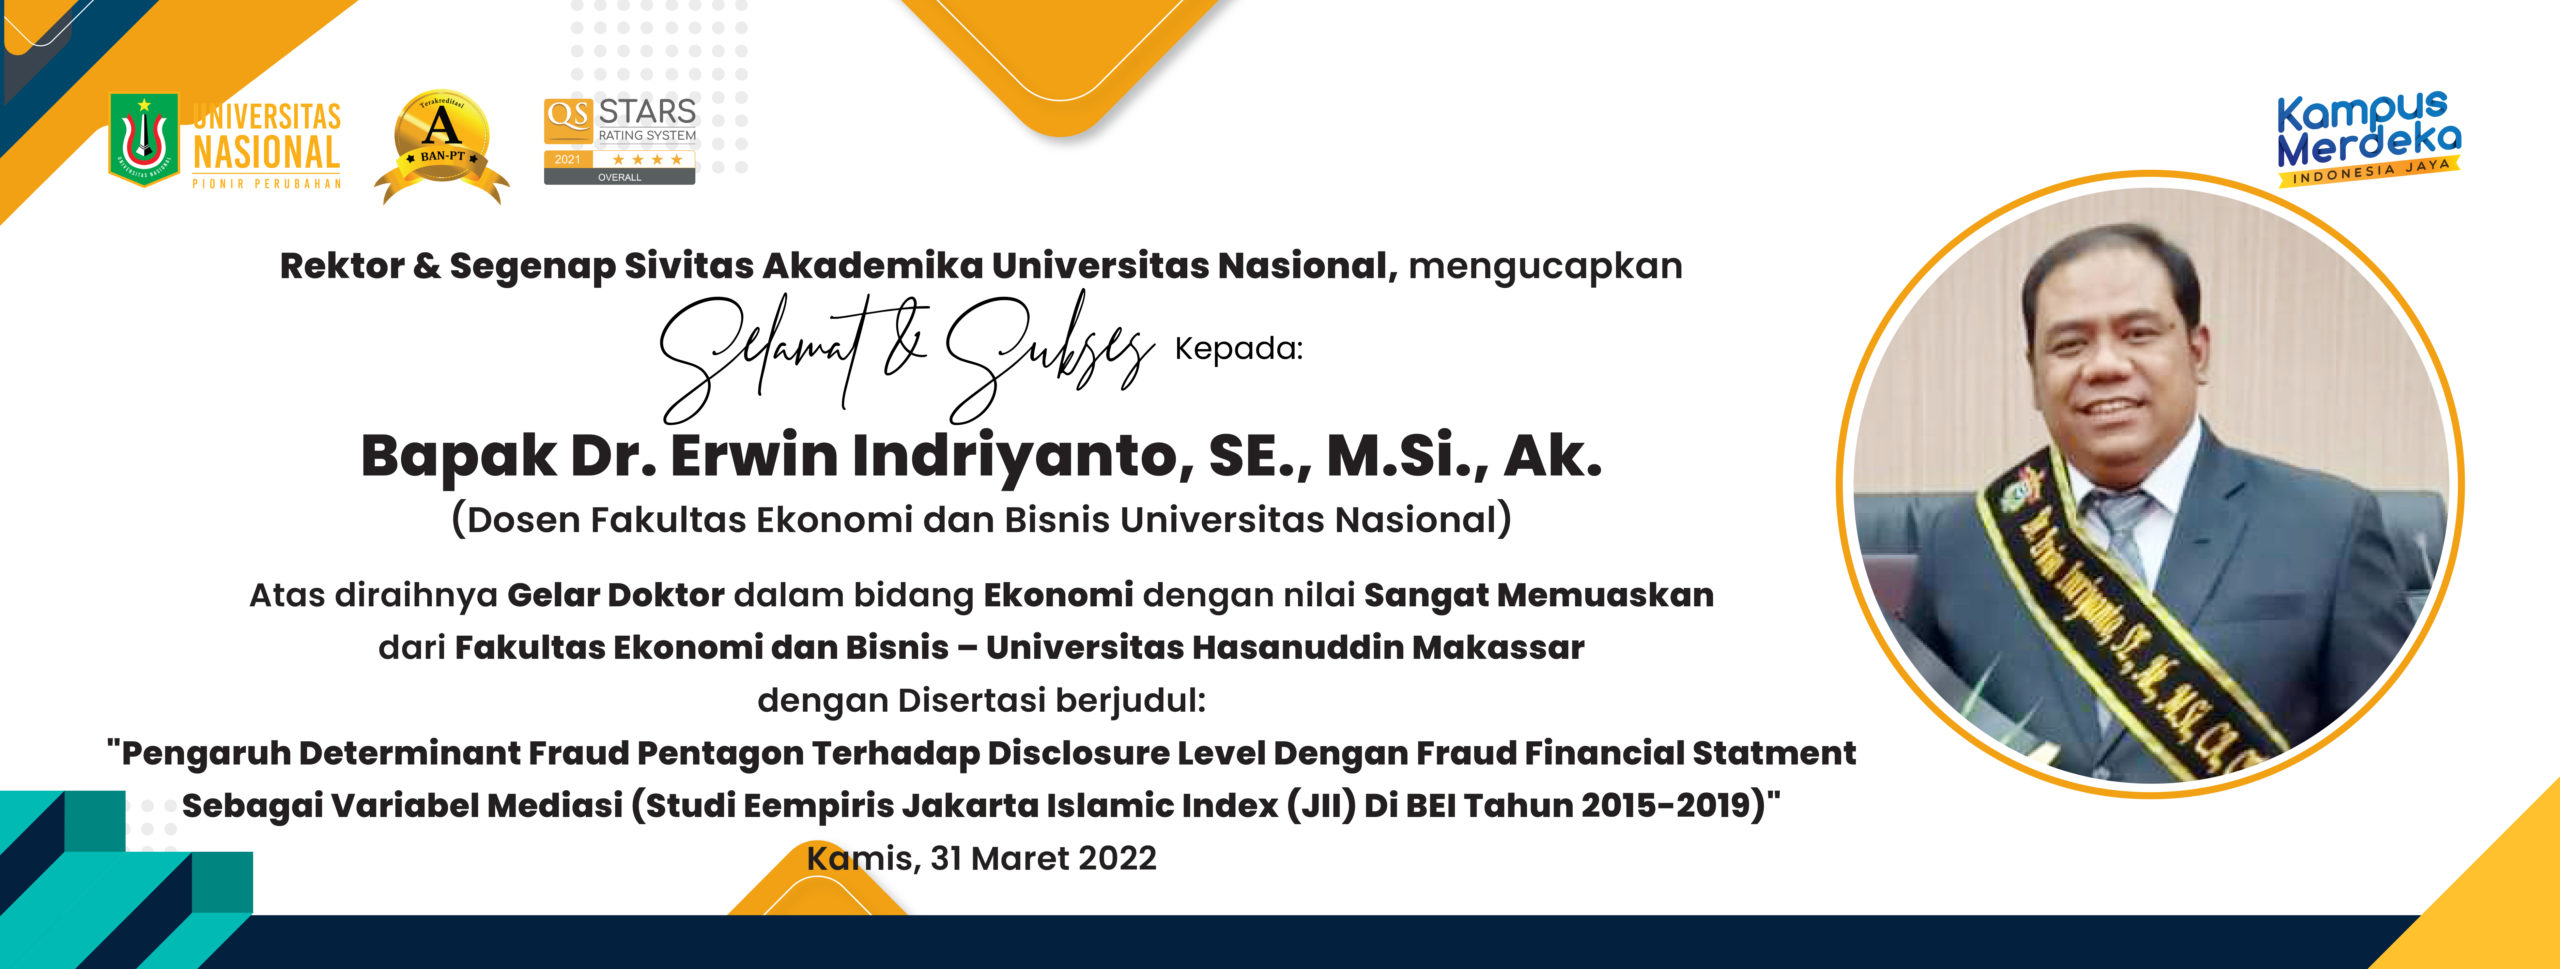 Selamat dan Sukses Kepada Dr. Erwin Indriyanto